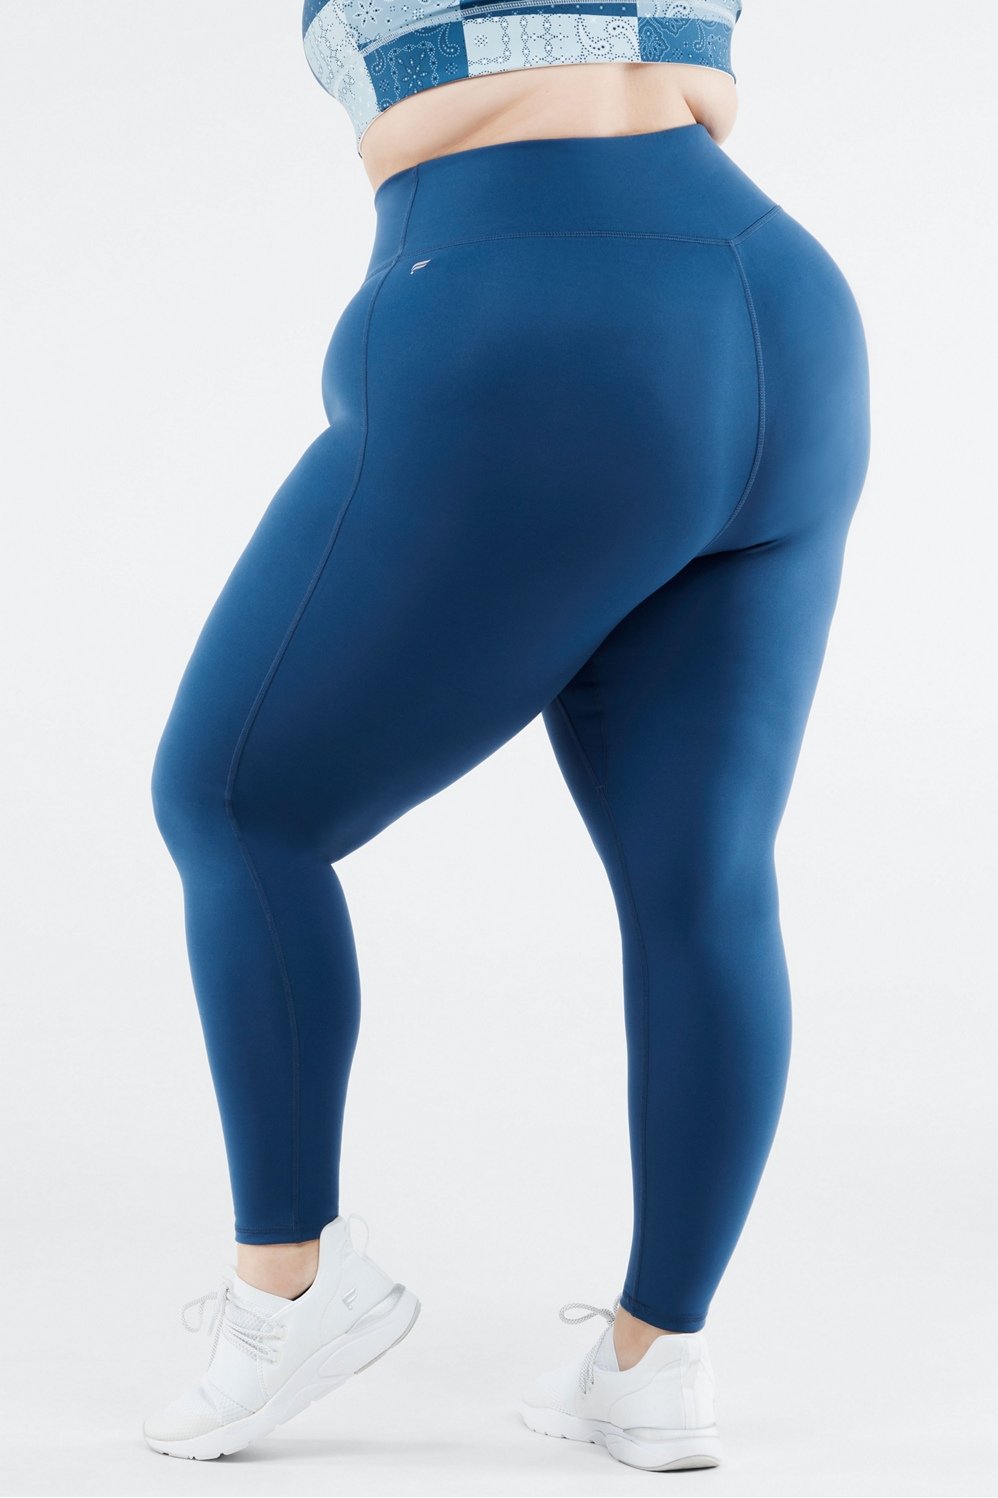 Fabletics Lisette High Waisted Leggings XXS short NEW NWT Retail $84 yoga  pants